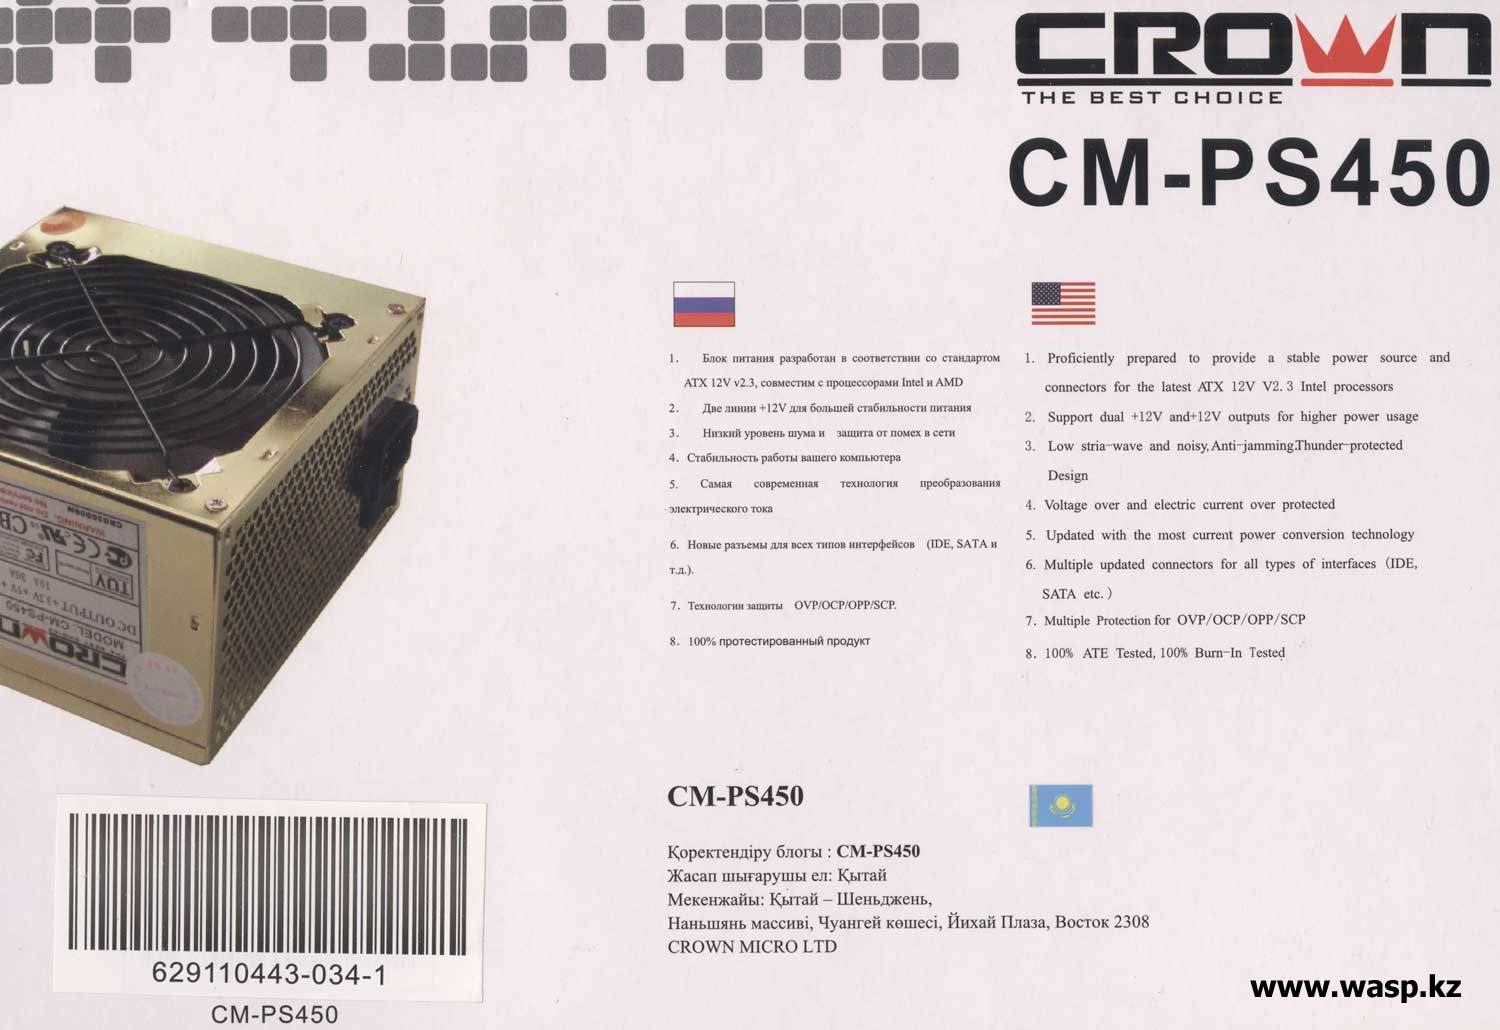 указанные характеристики Crown CM-PS450